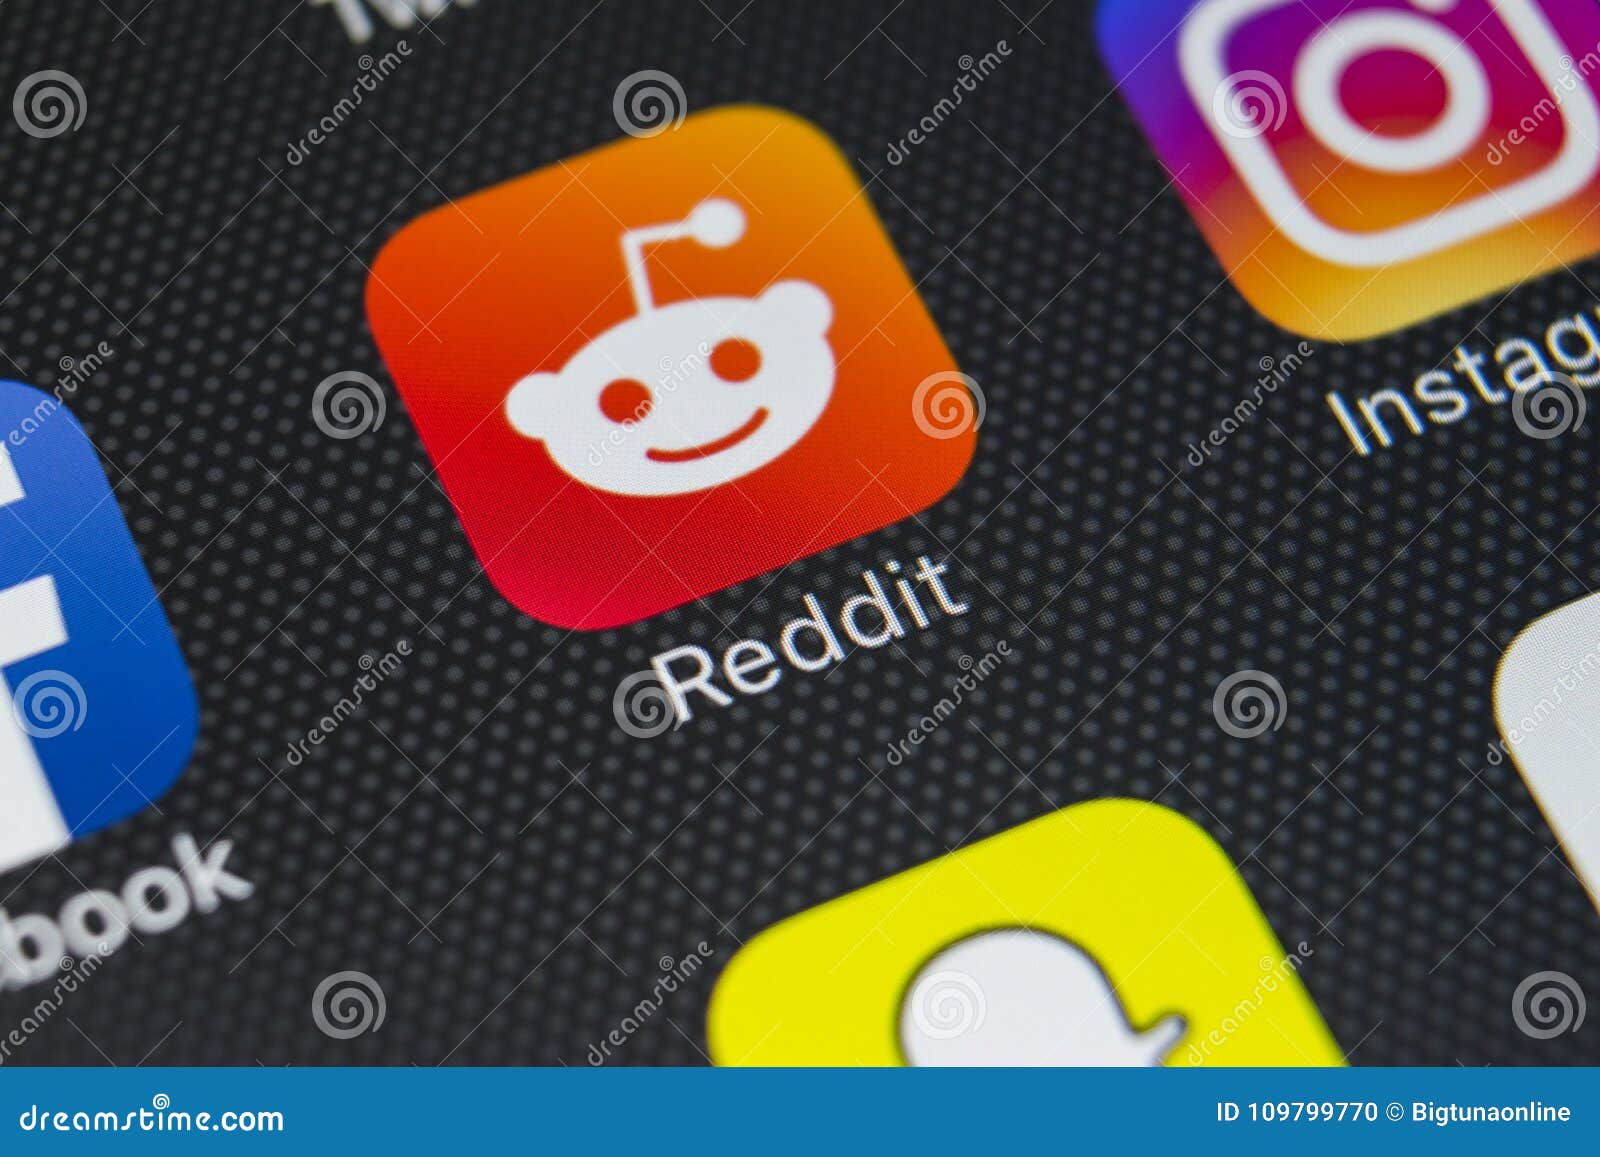 Reddit Application Icon On Apple IPhone X Smartphone ...